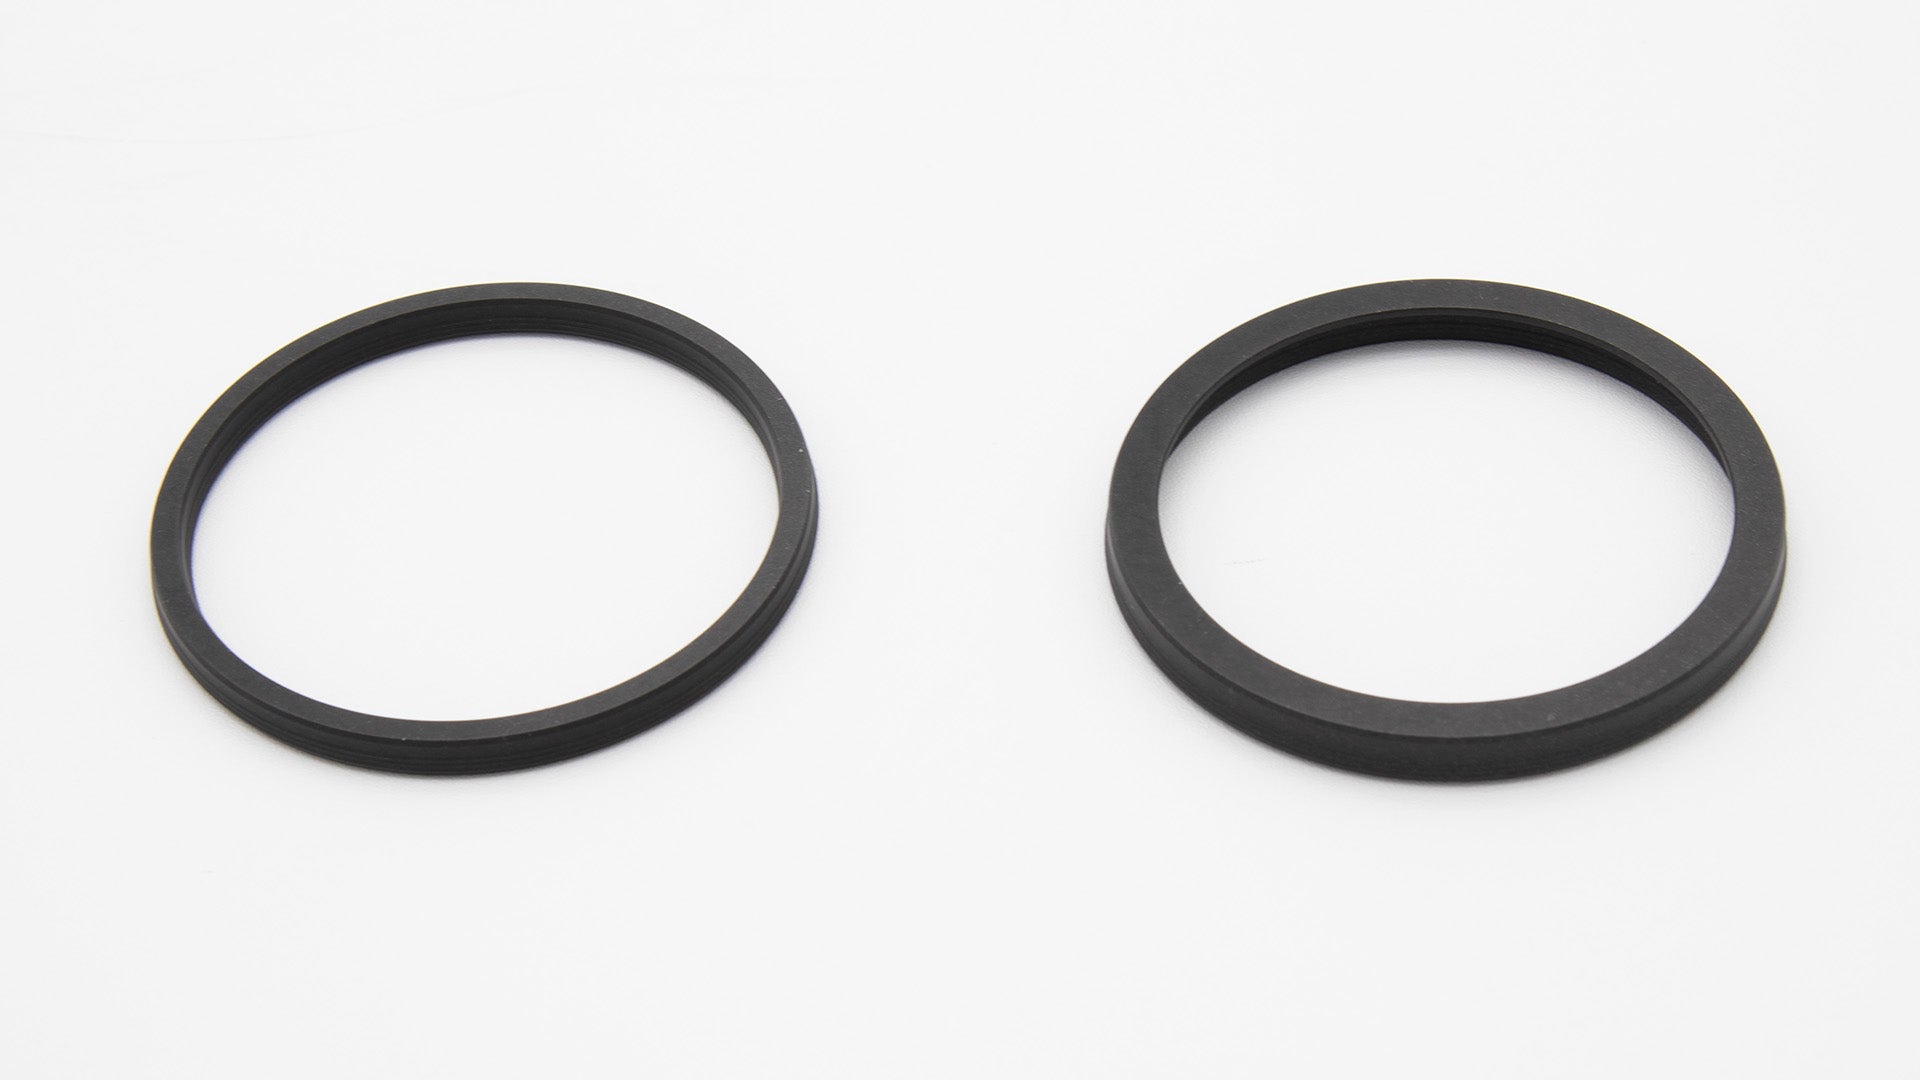 Two black circular seals.